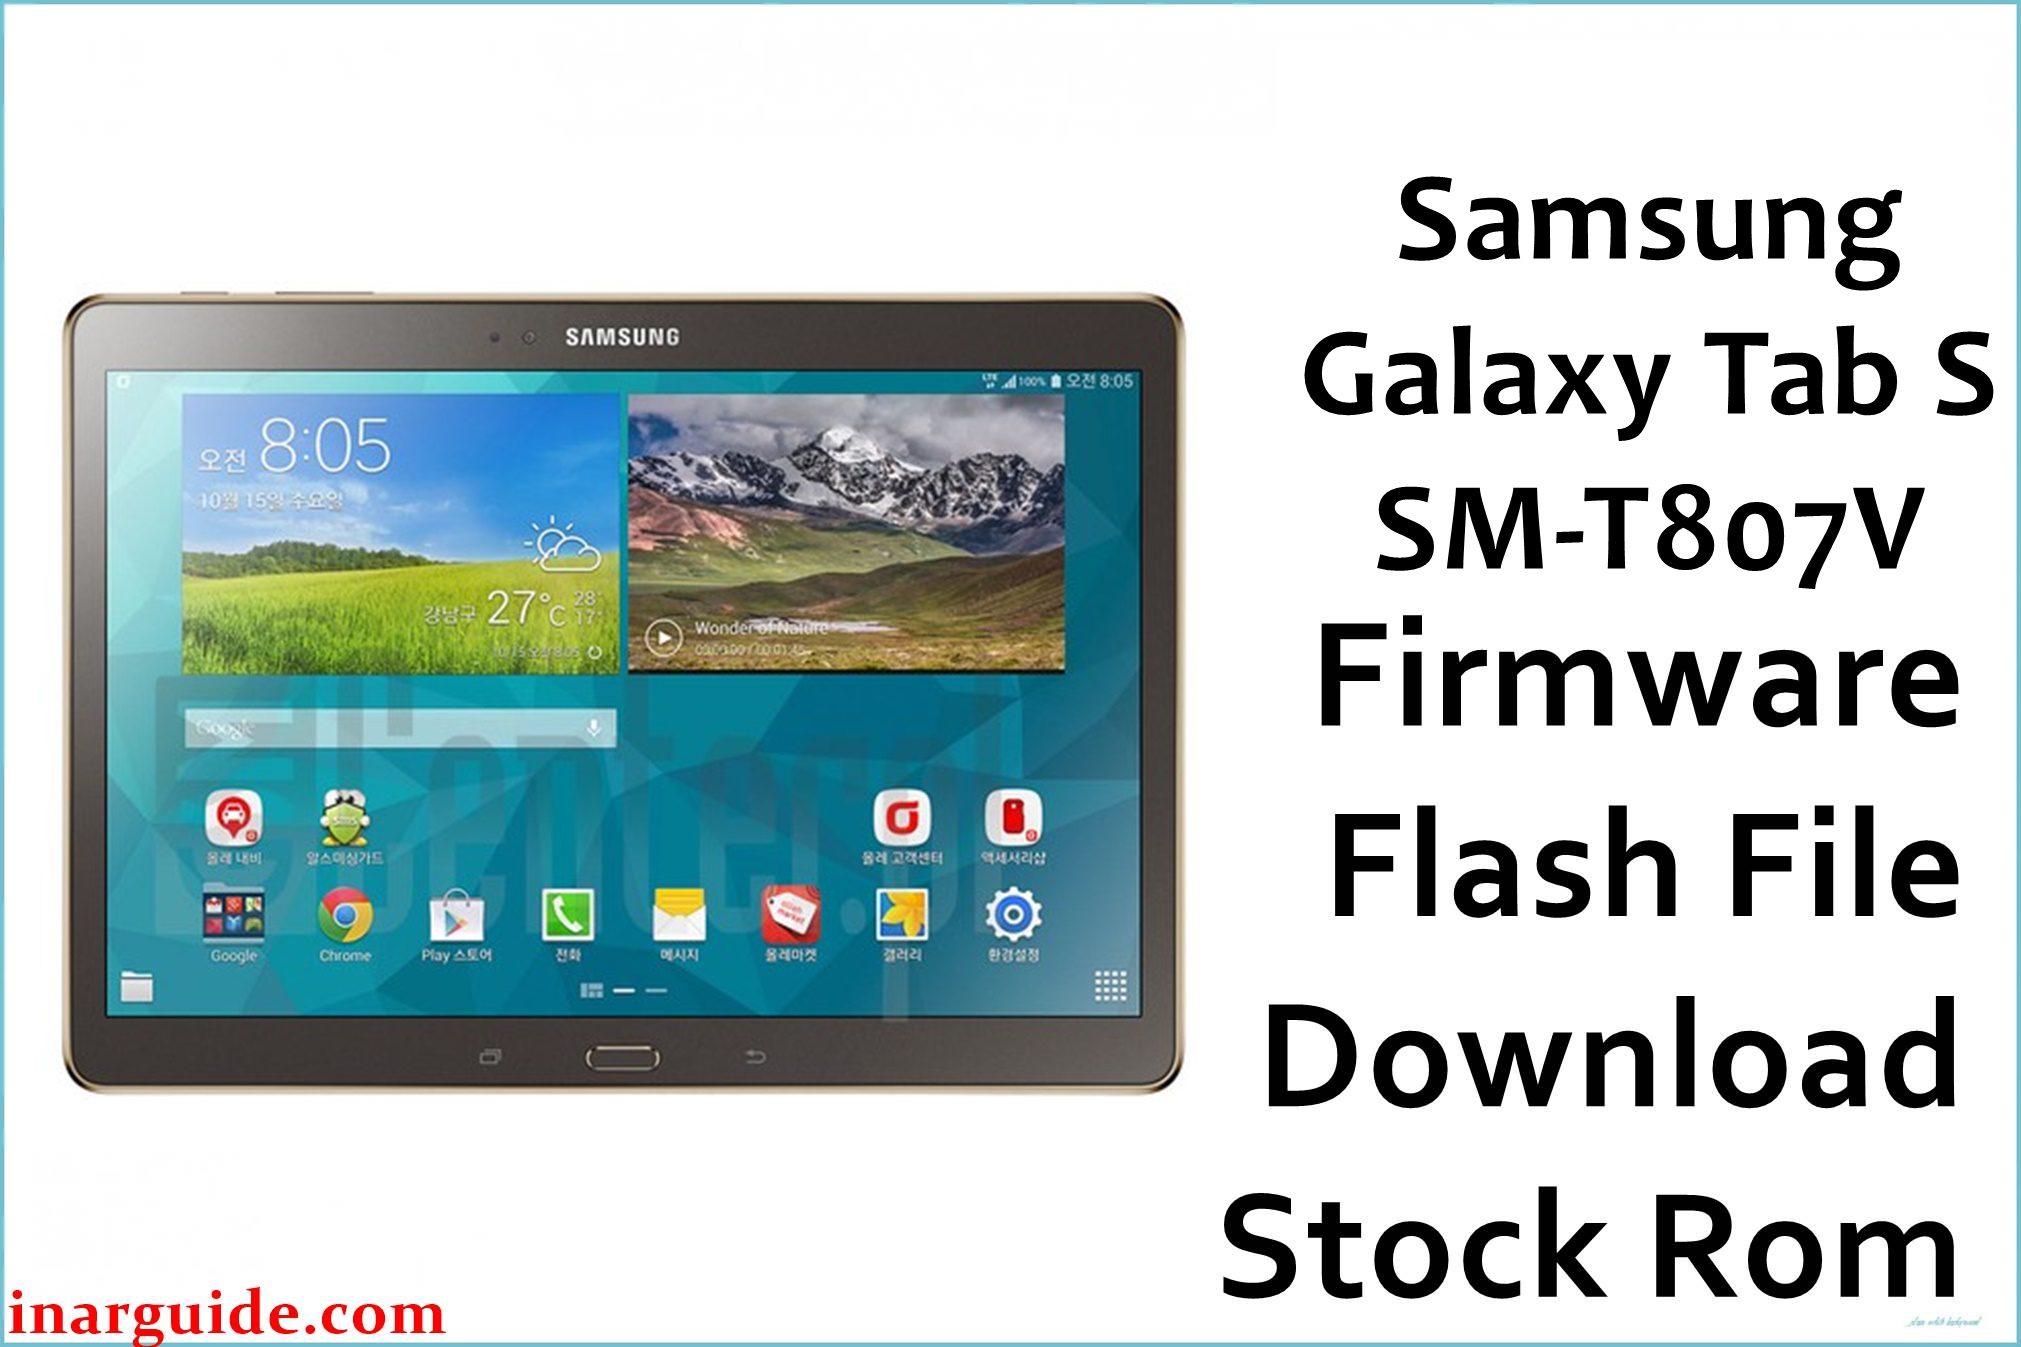 Samsung Galaxy Tab S SM T807V